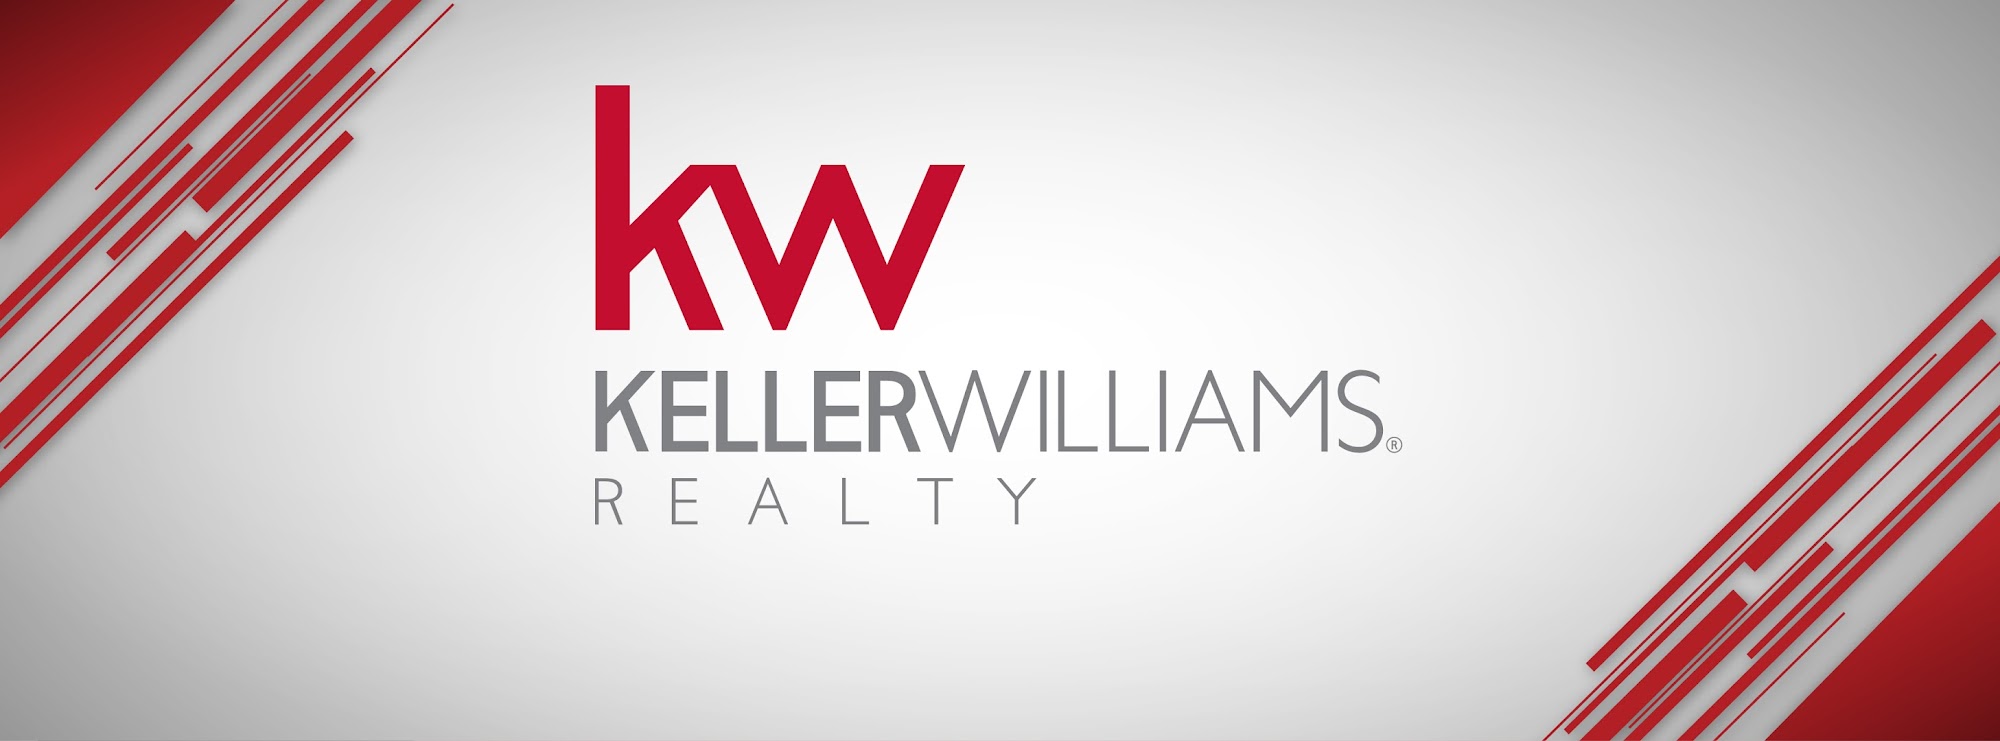 Jason Weaber Realty - Keller Williams